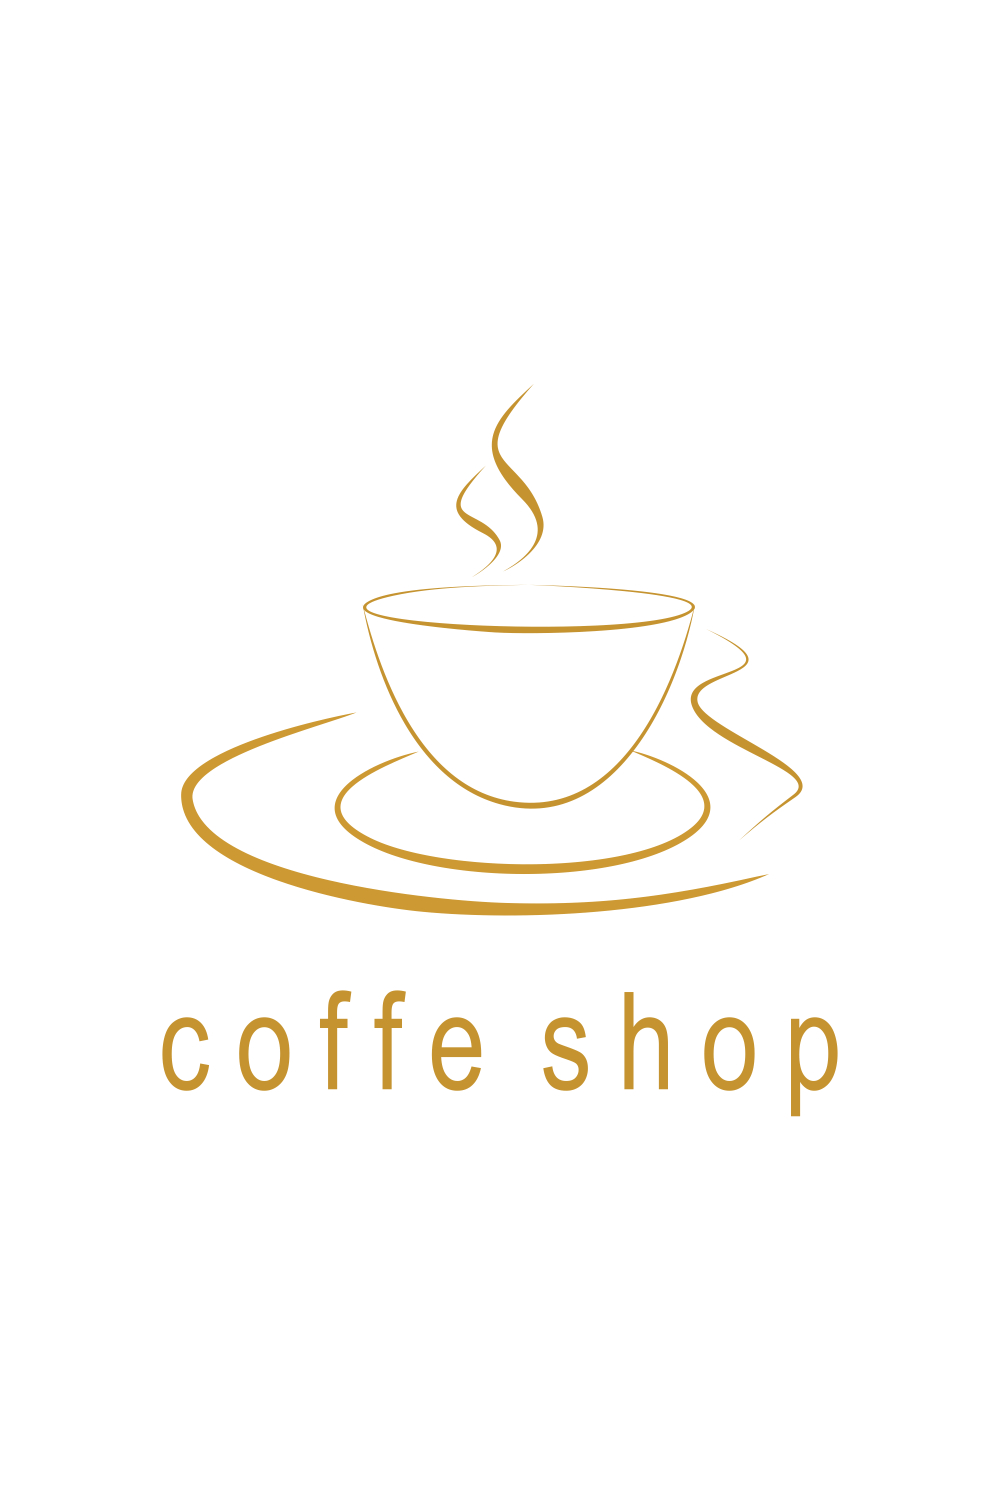 coffee shop logo vector design templates pinterest preview image.